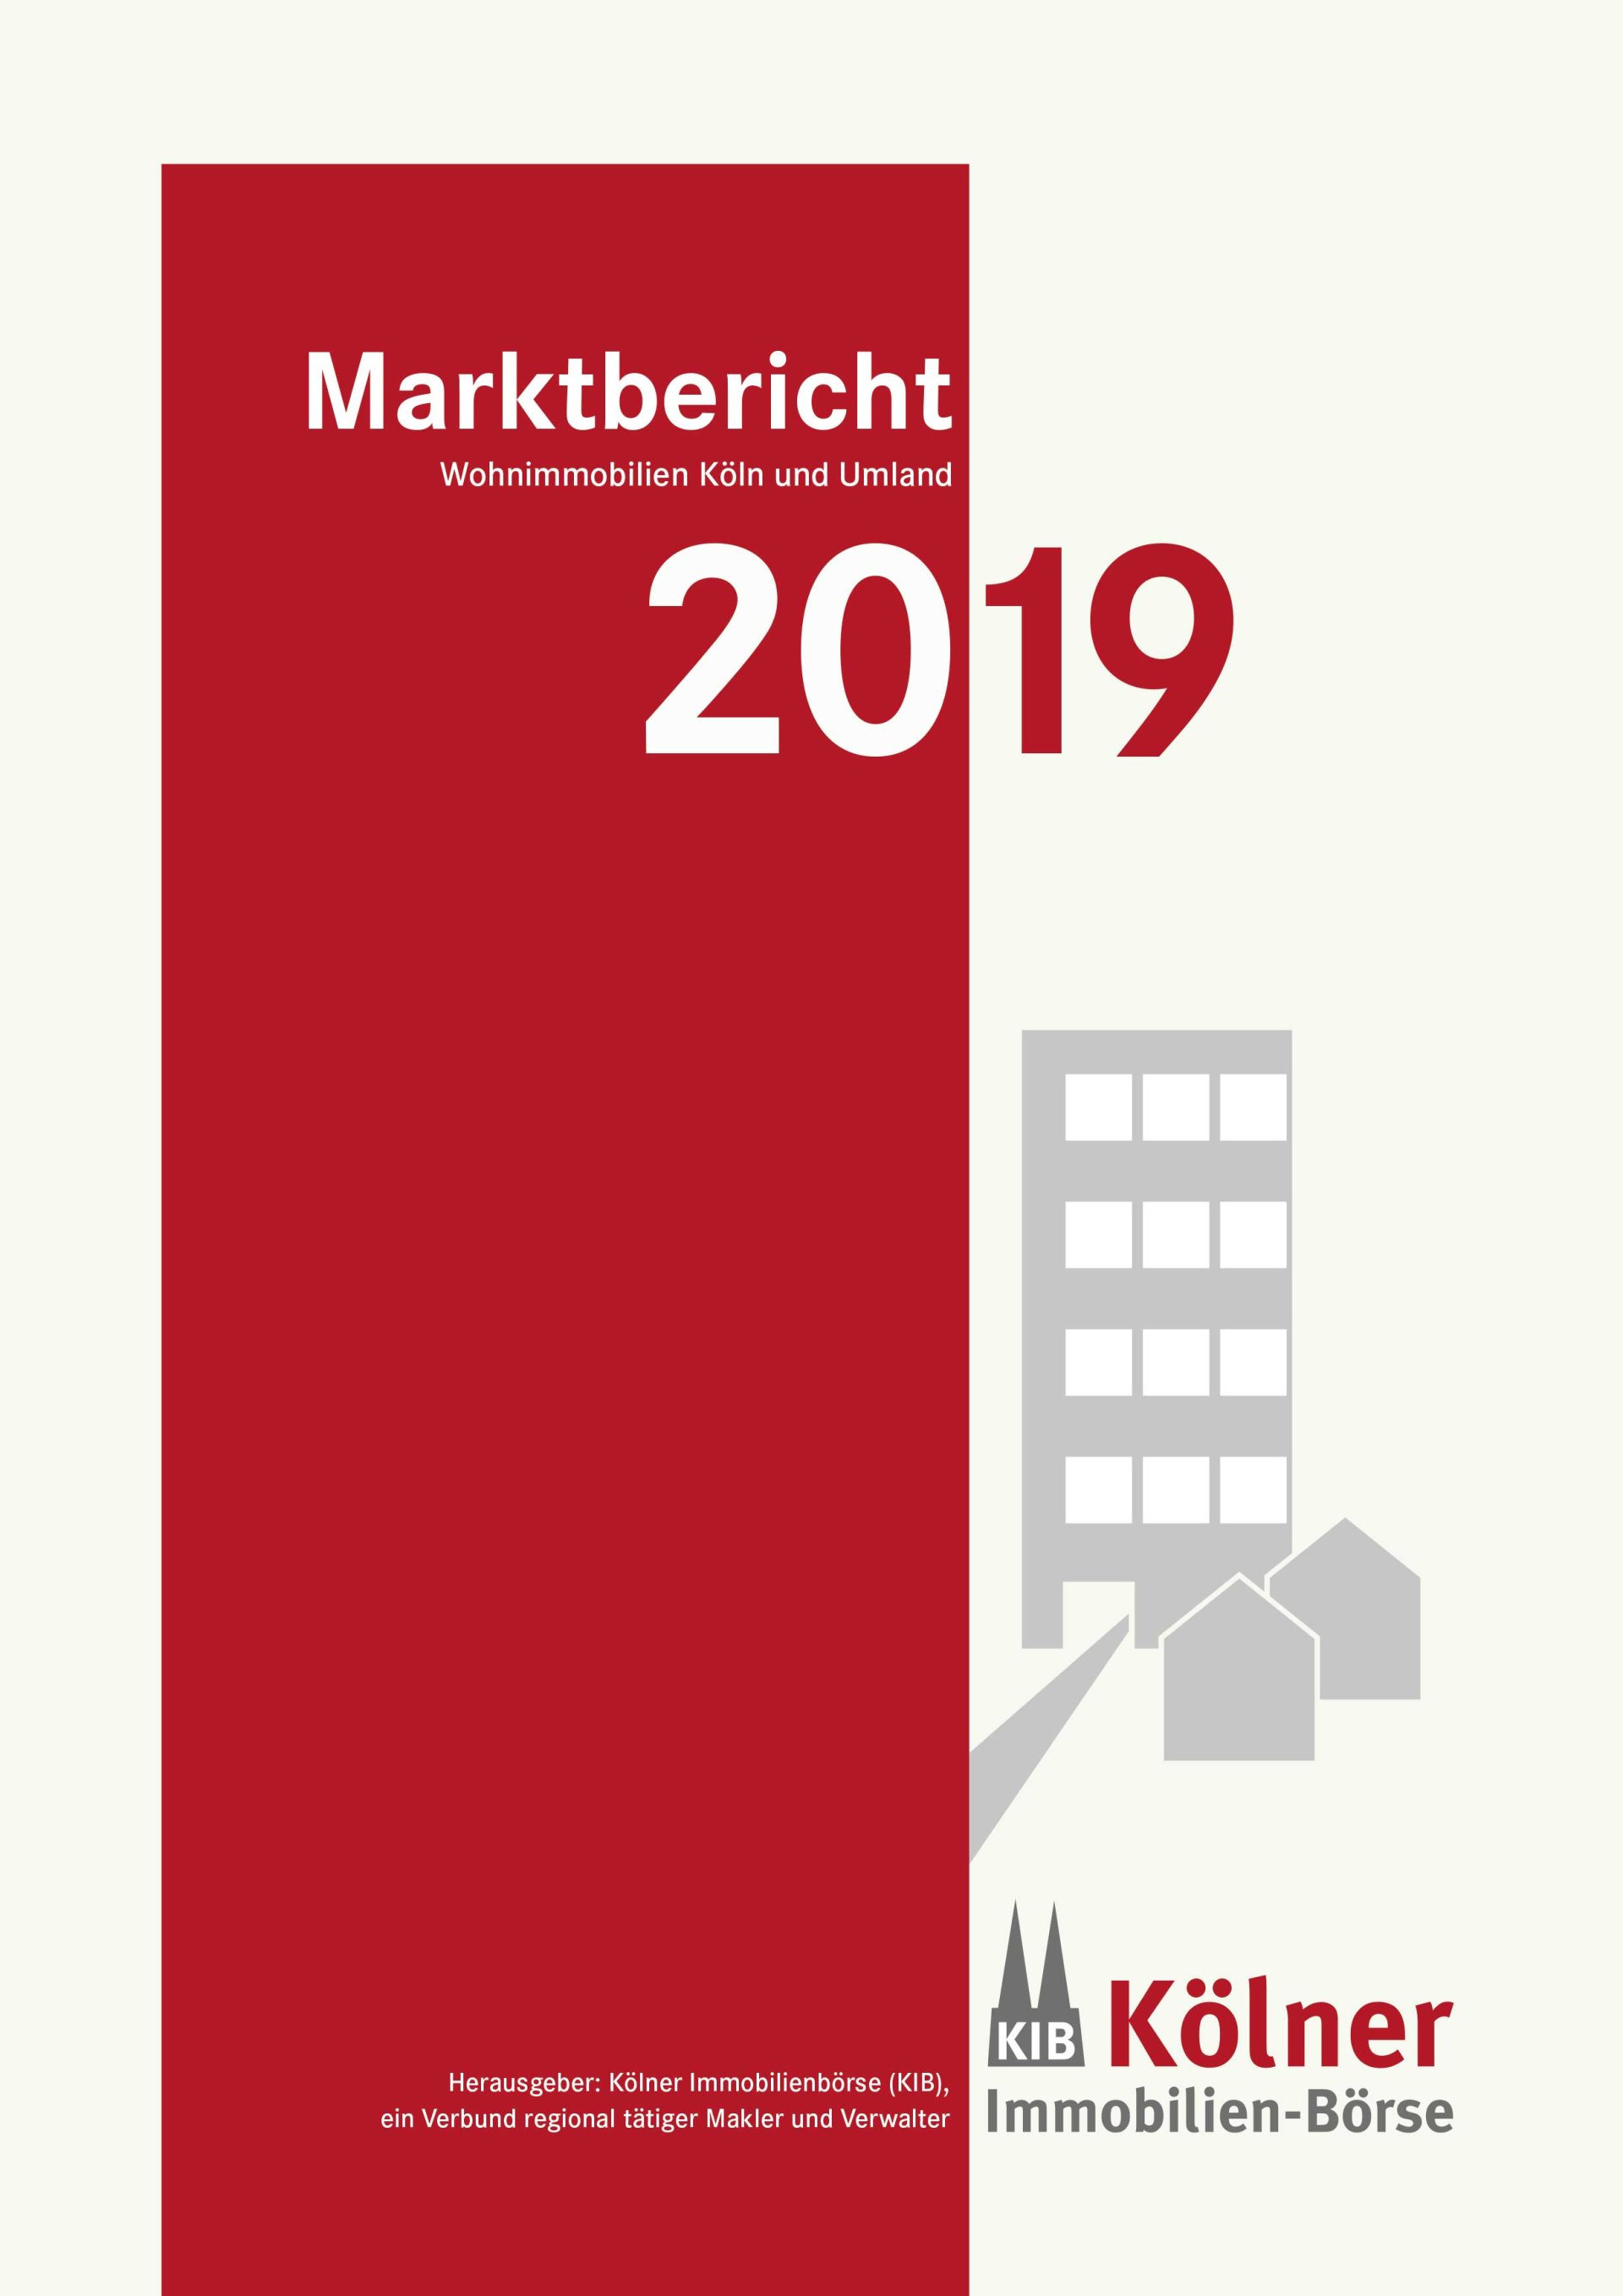 kib_marktbericht_2019-1_2.jpg